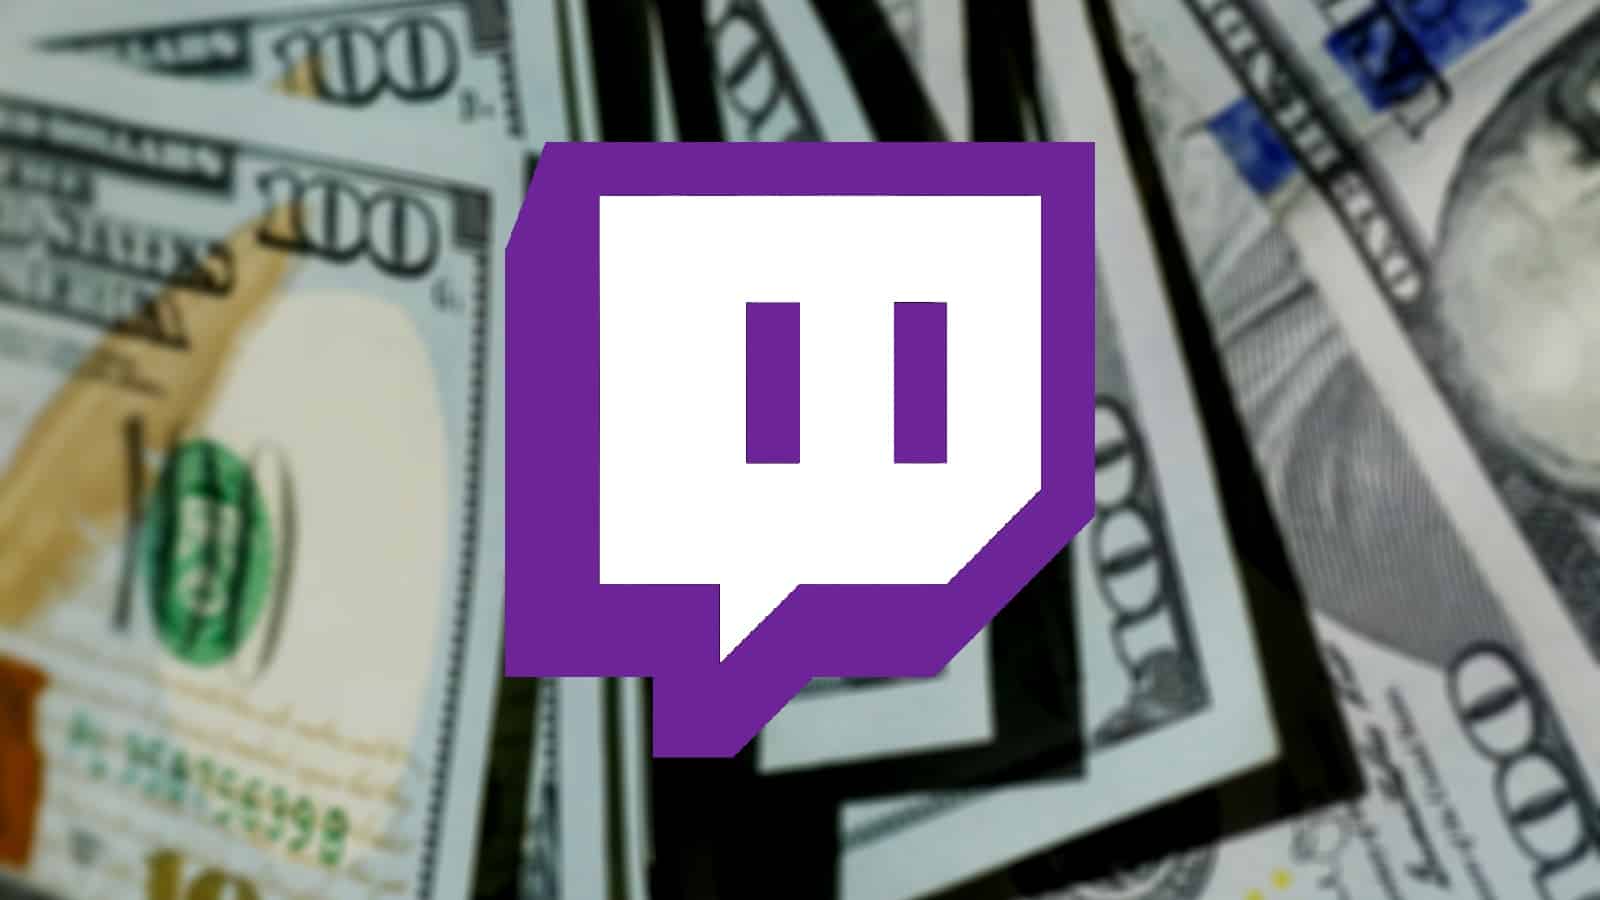 twitch logo on $100 bills